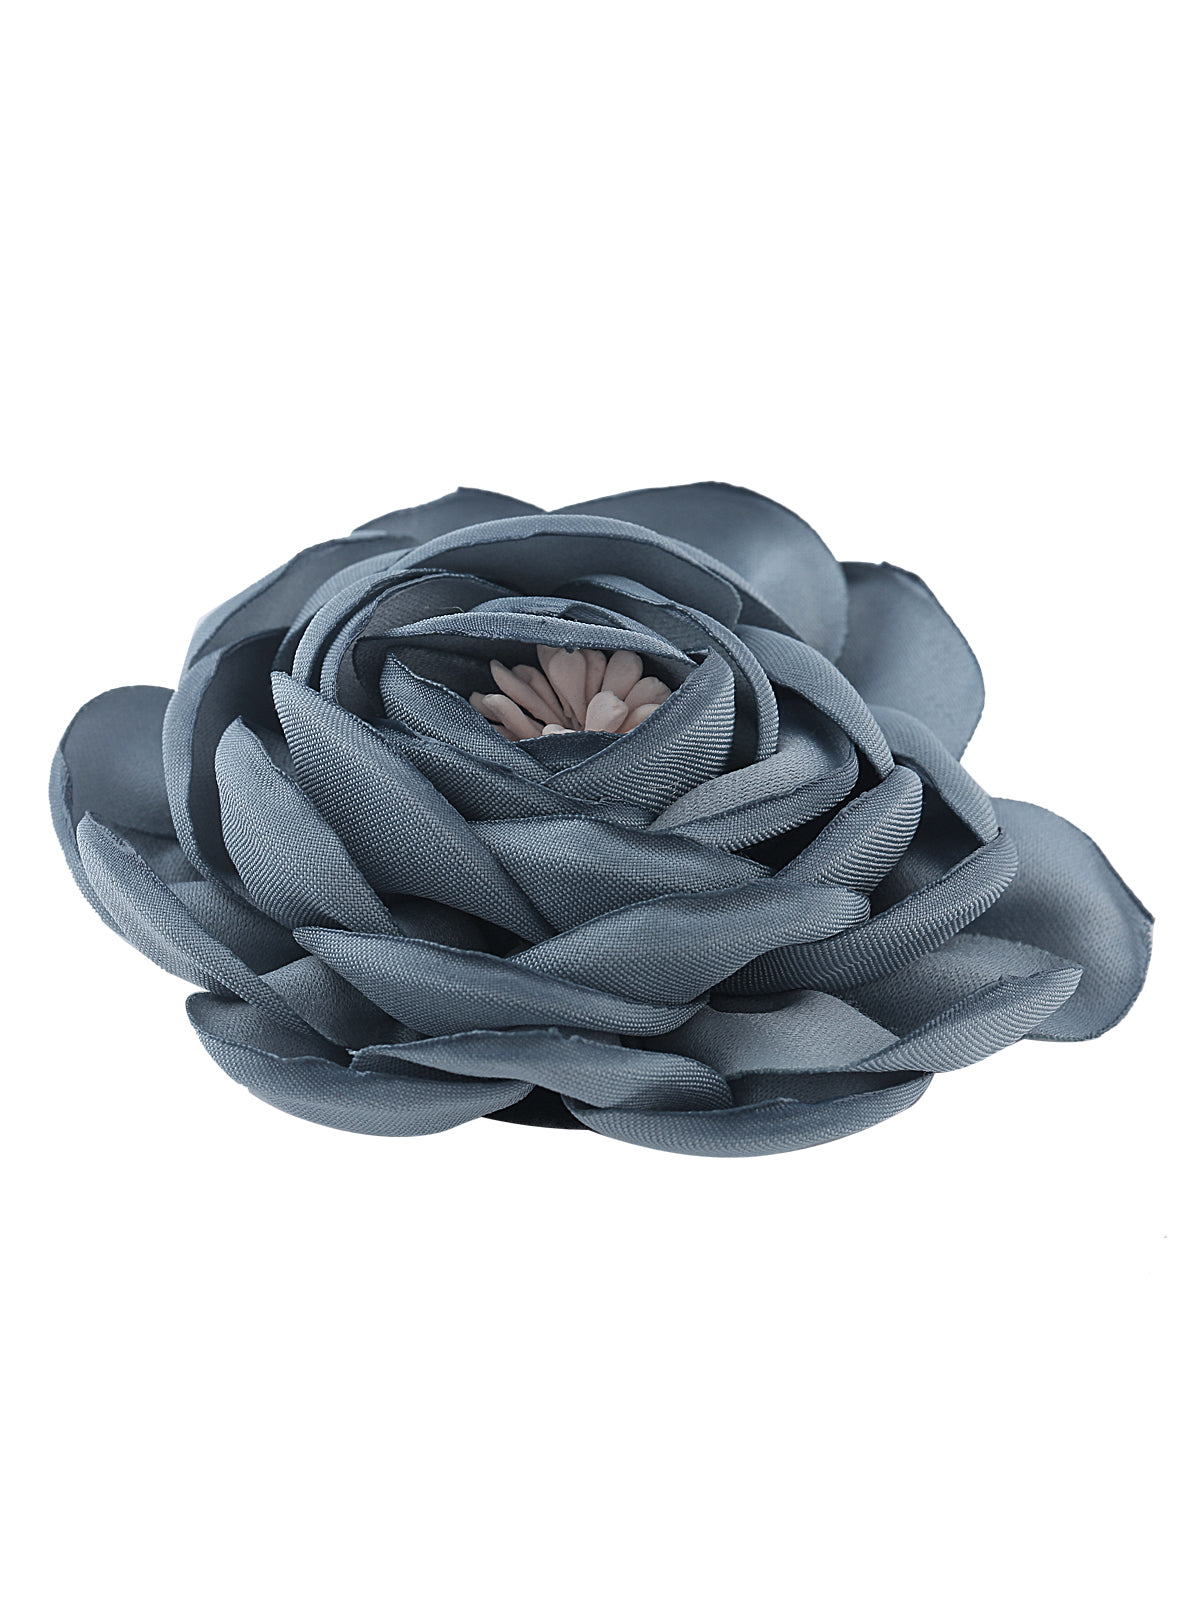 Grey Singed Edges Decorative Satin Flower